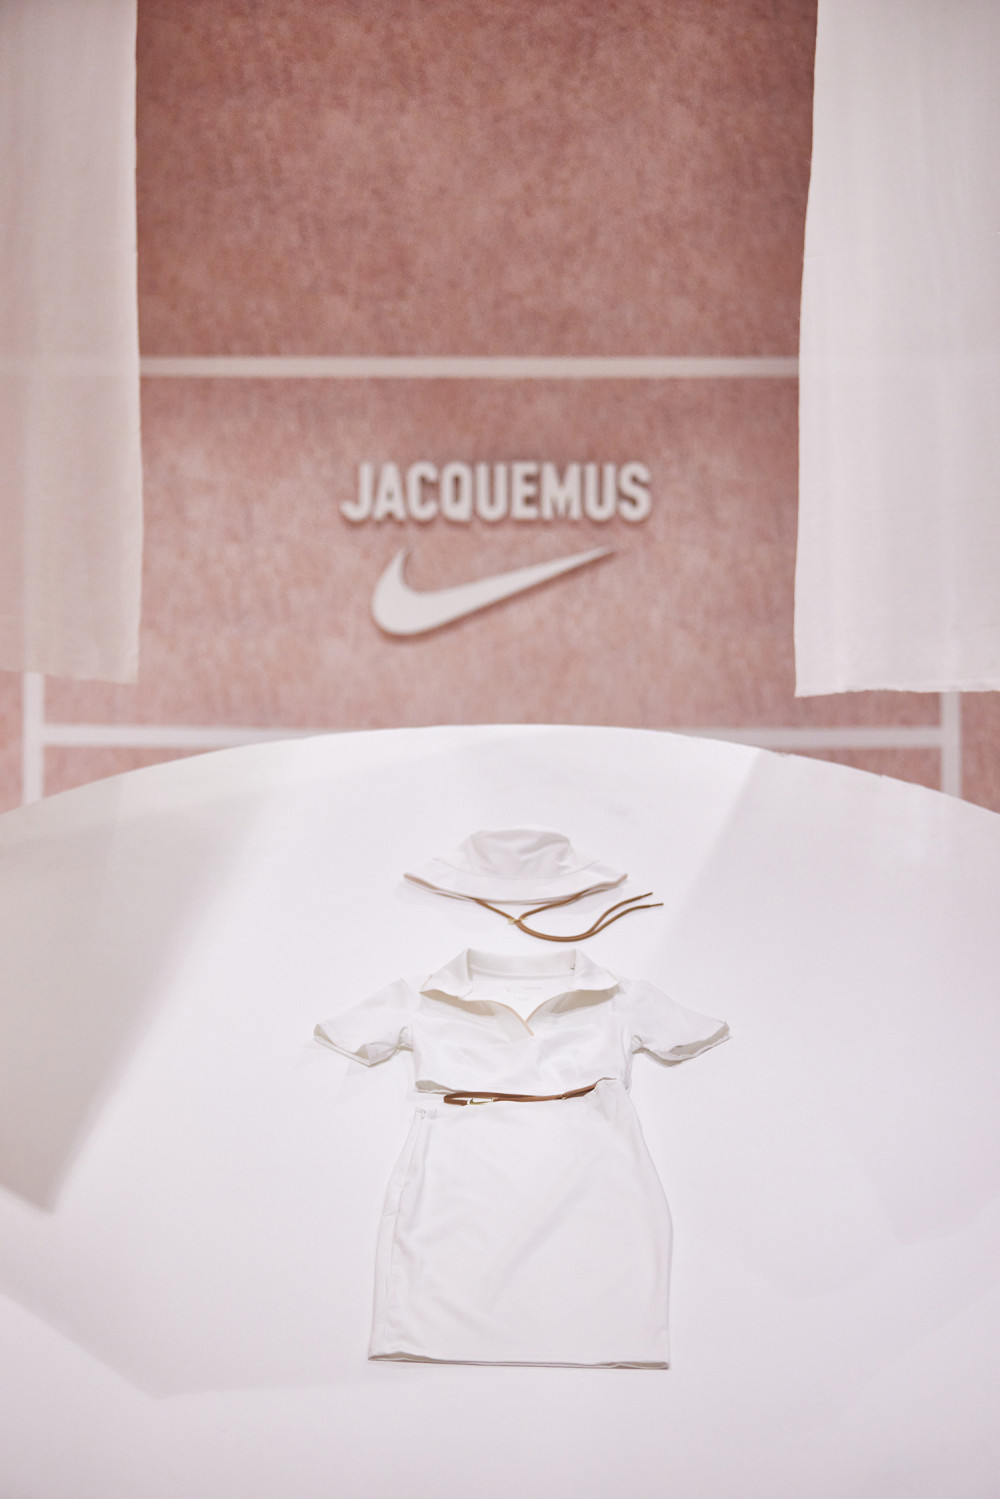 Nike x Jacquemus at Incu – Semi Permanent Brand Studio